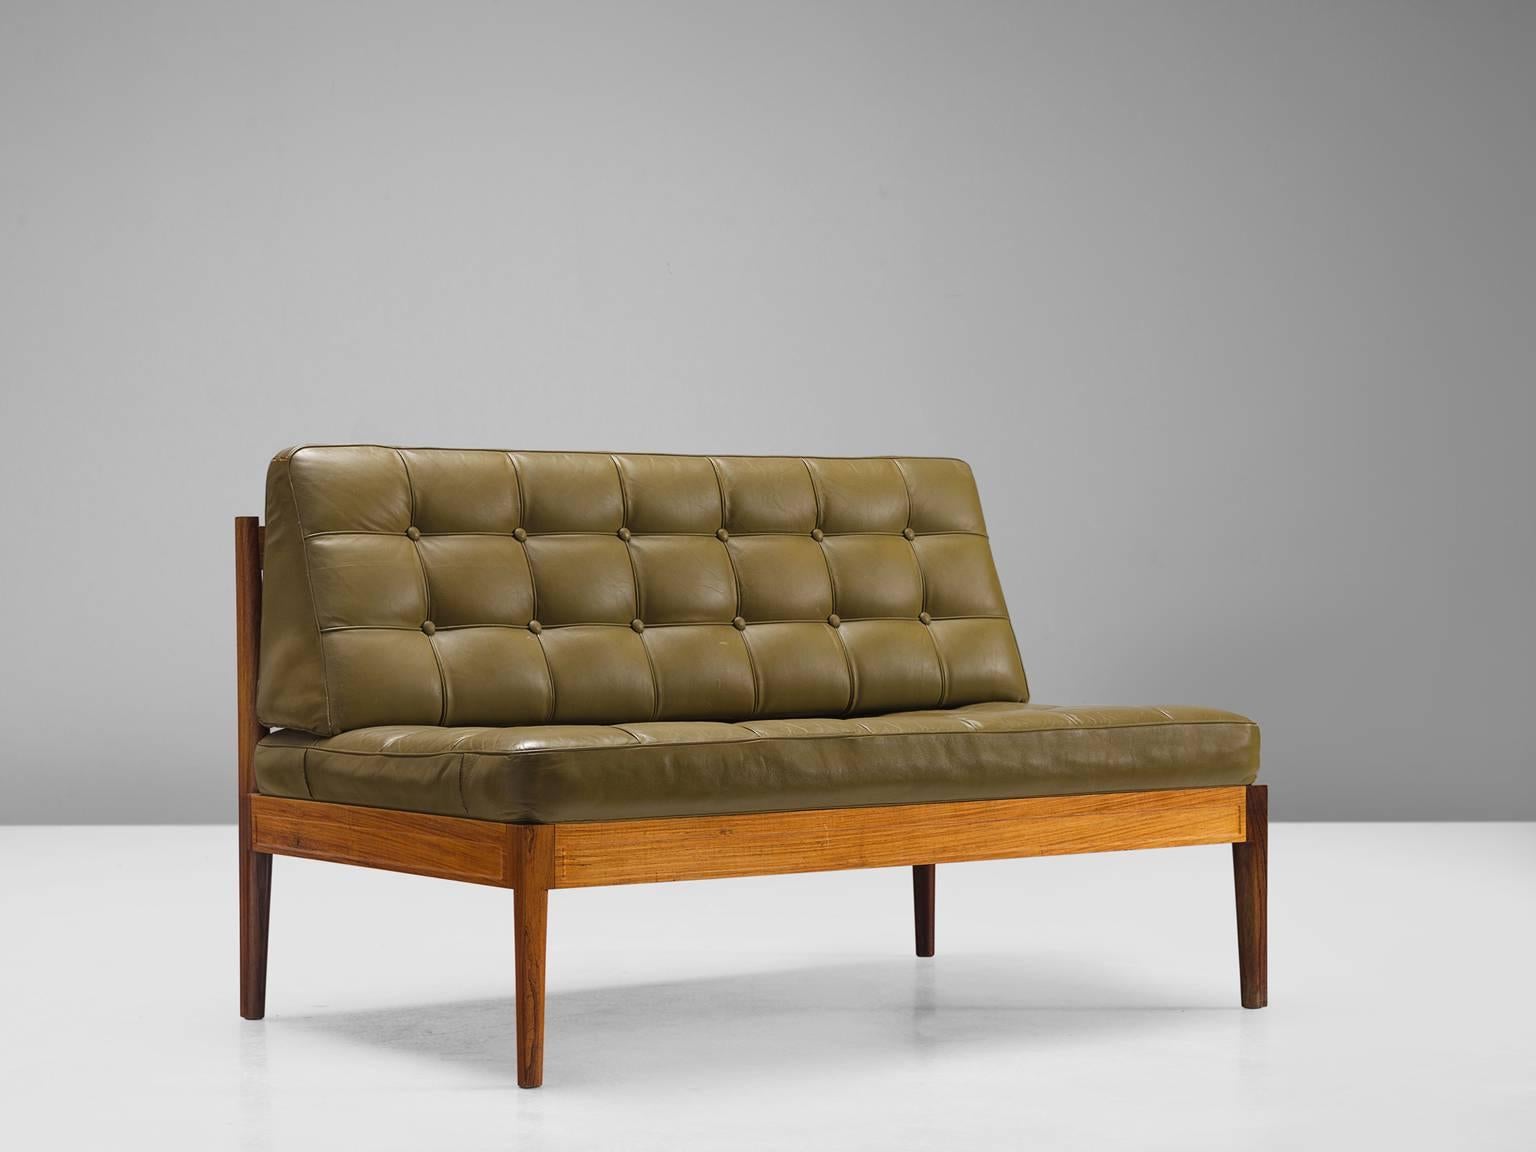 Scandinavian Modern Finn Juhl 'Diplomat' Sofa in Olive Green Leather and Rosewood